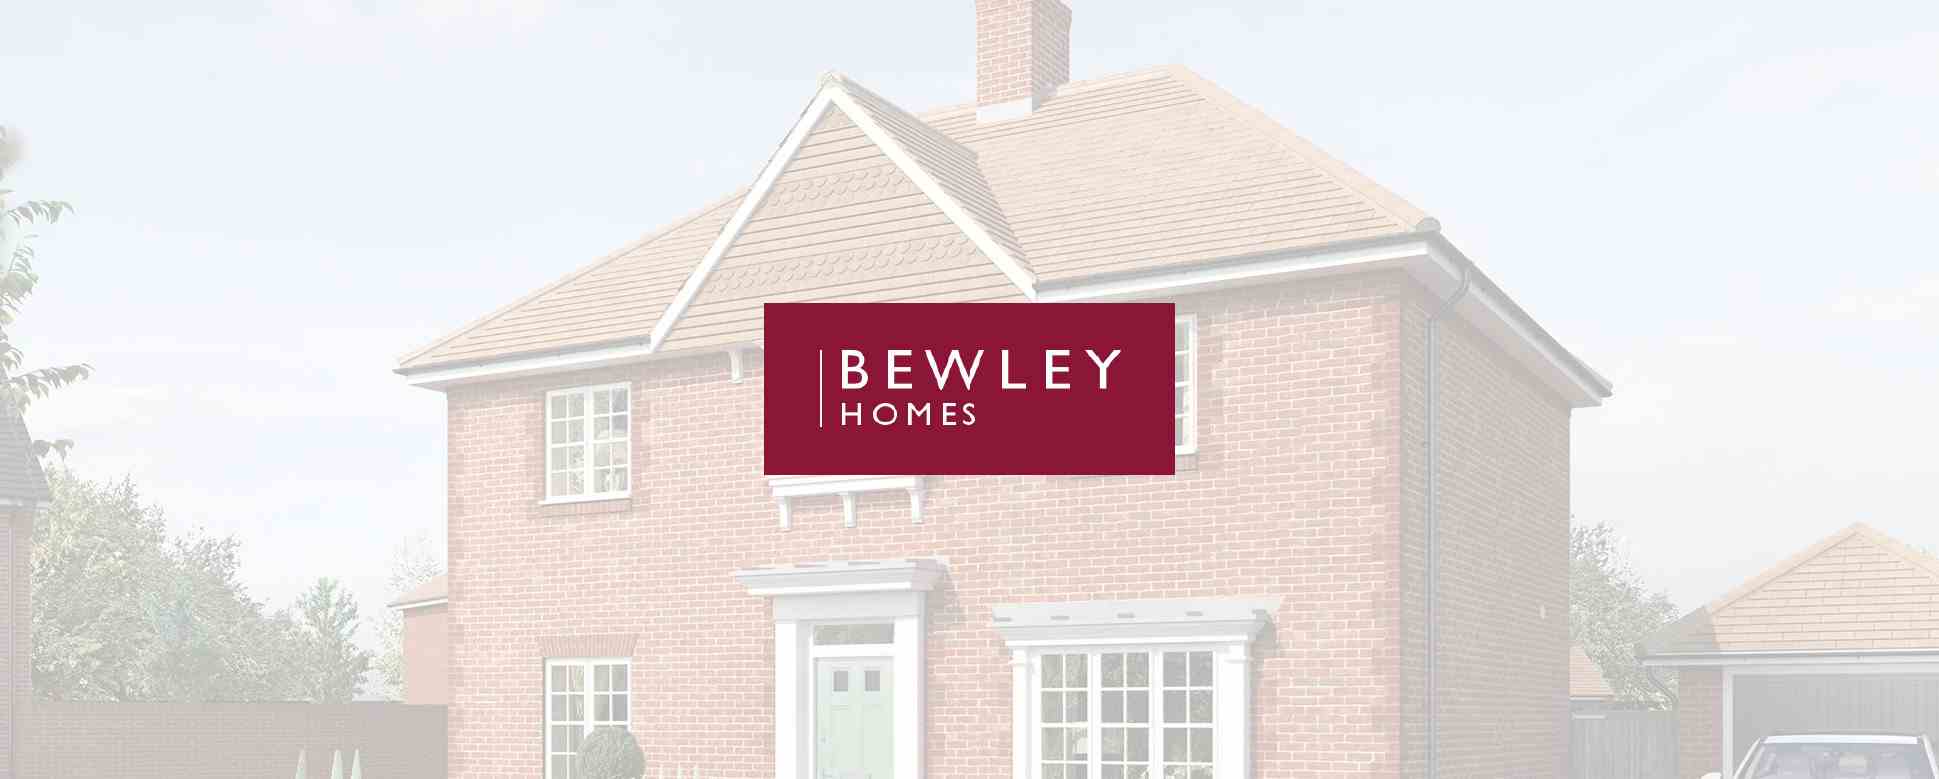 Meet the Developer – Bewley Homes